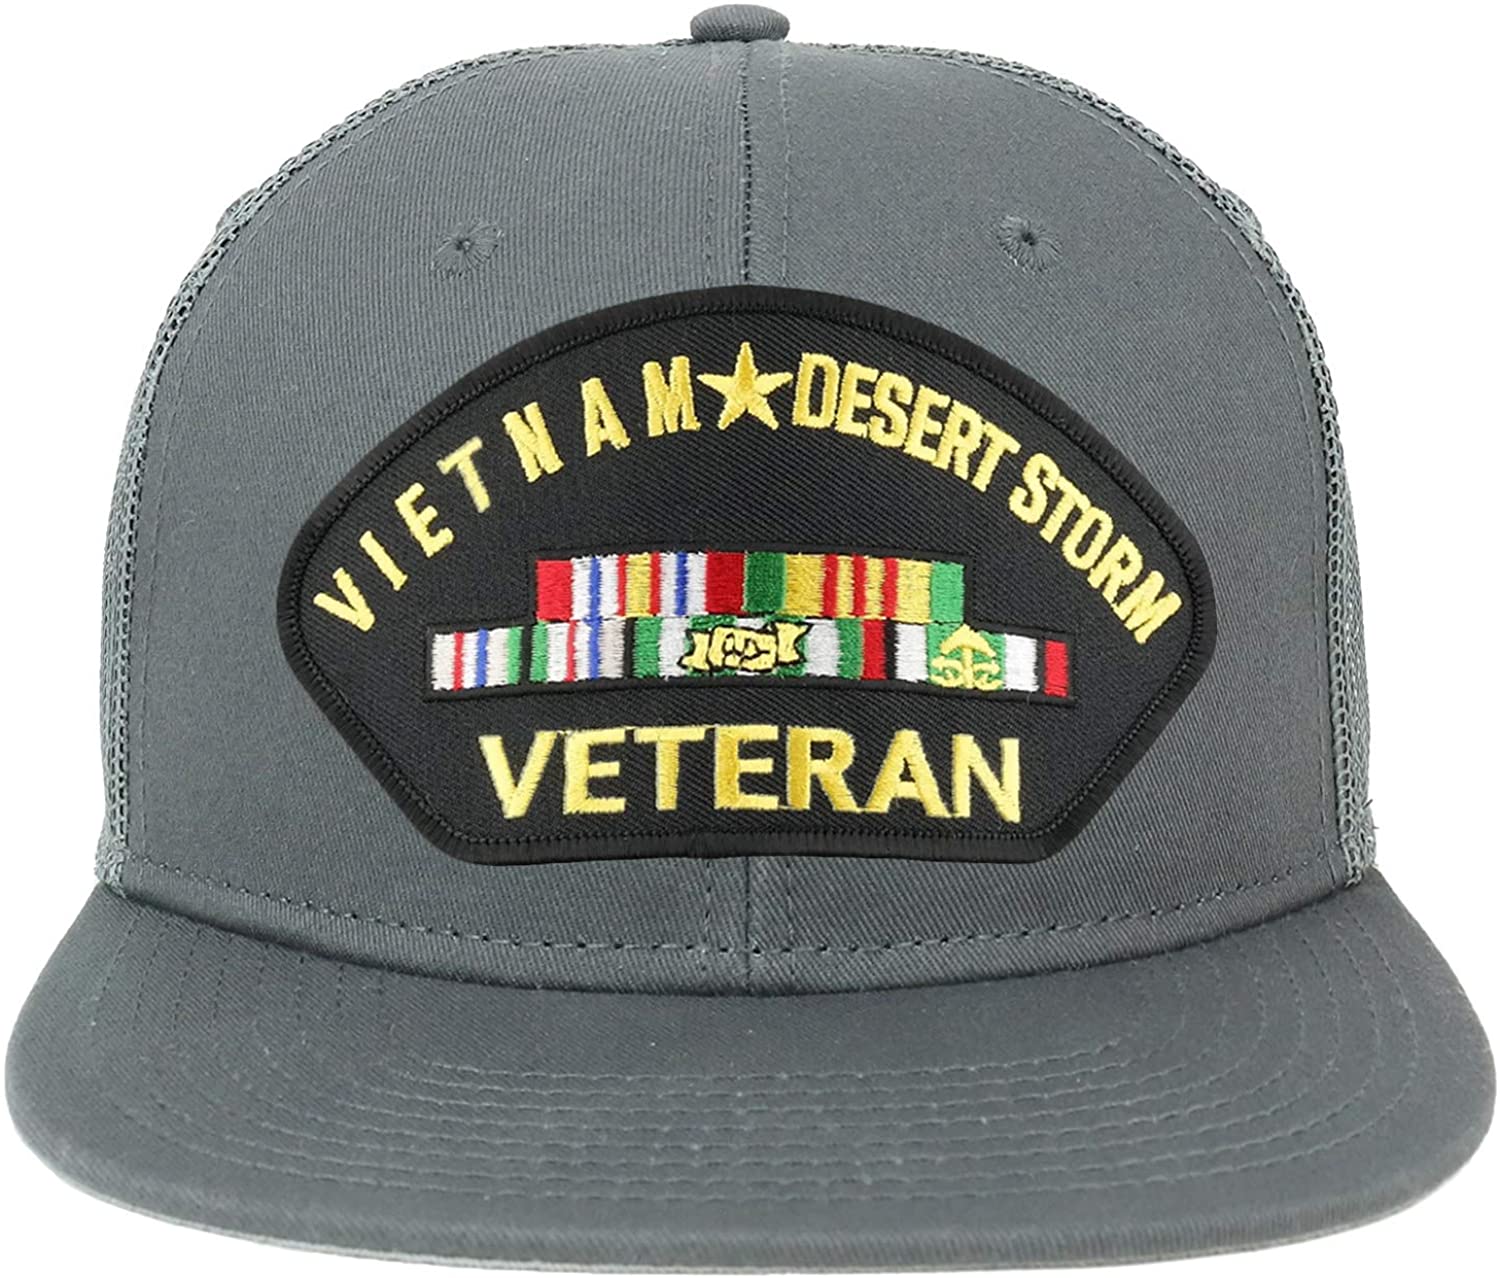 Armycrew Oversize XXL Vietnam Desert Storm Veteran Patch Flatbill Mesh Snapback Cap - Black - 2XL